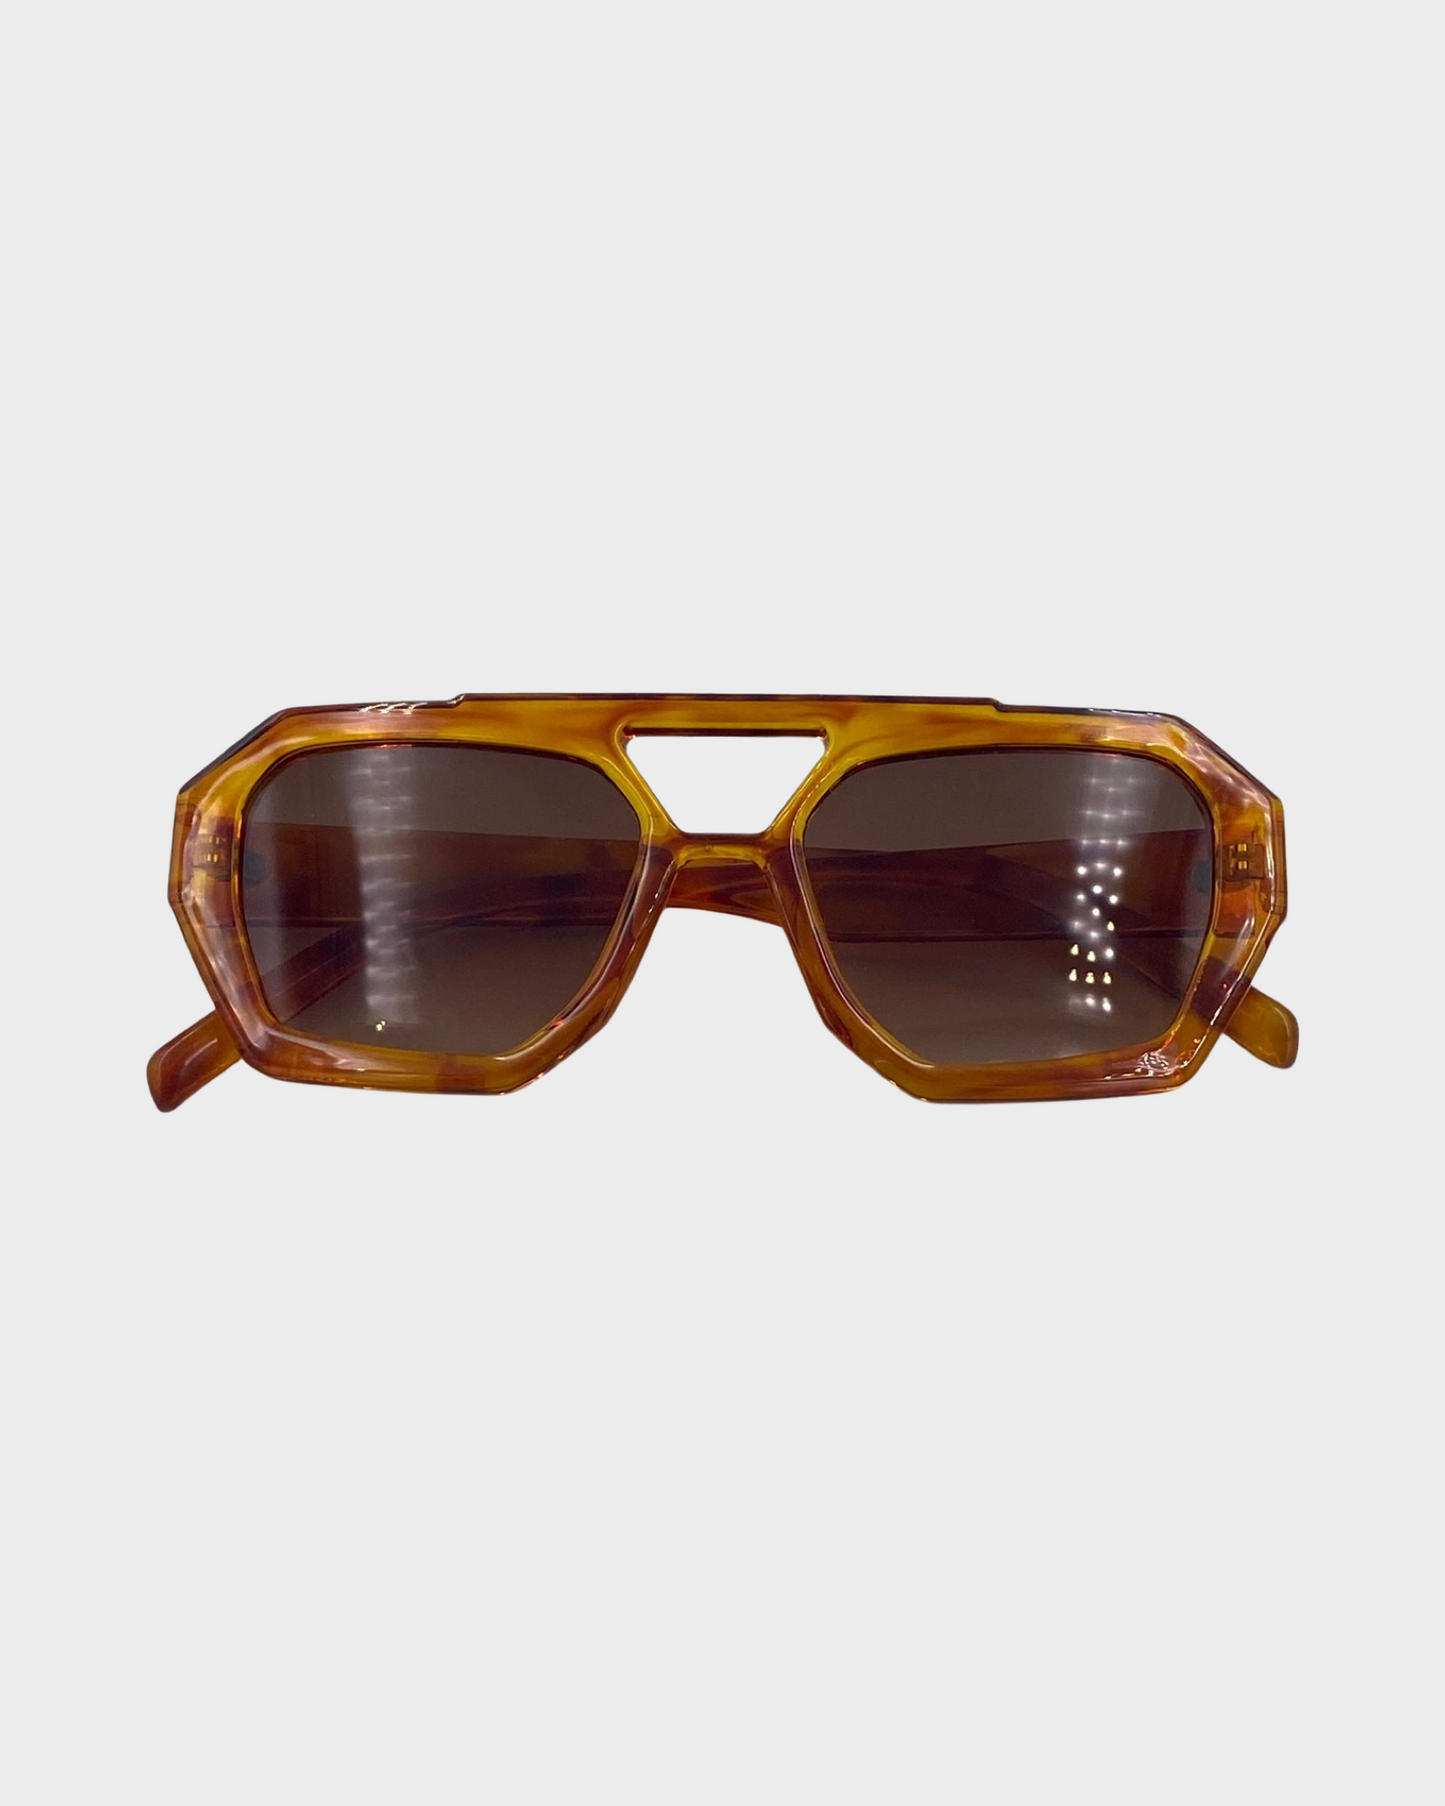 70's Edgy Sunglasses